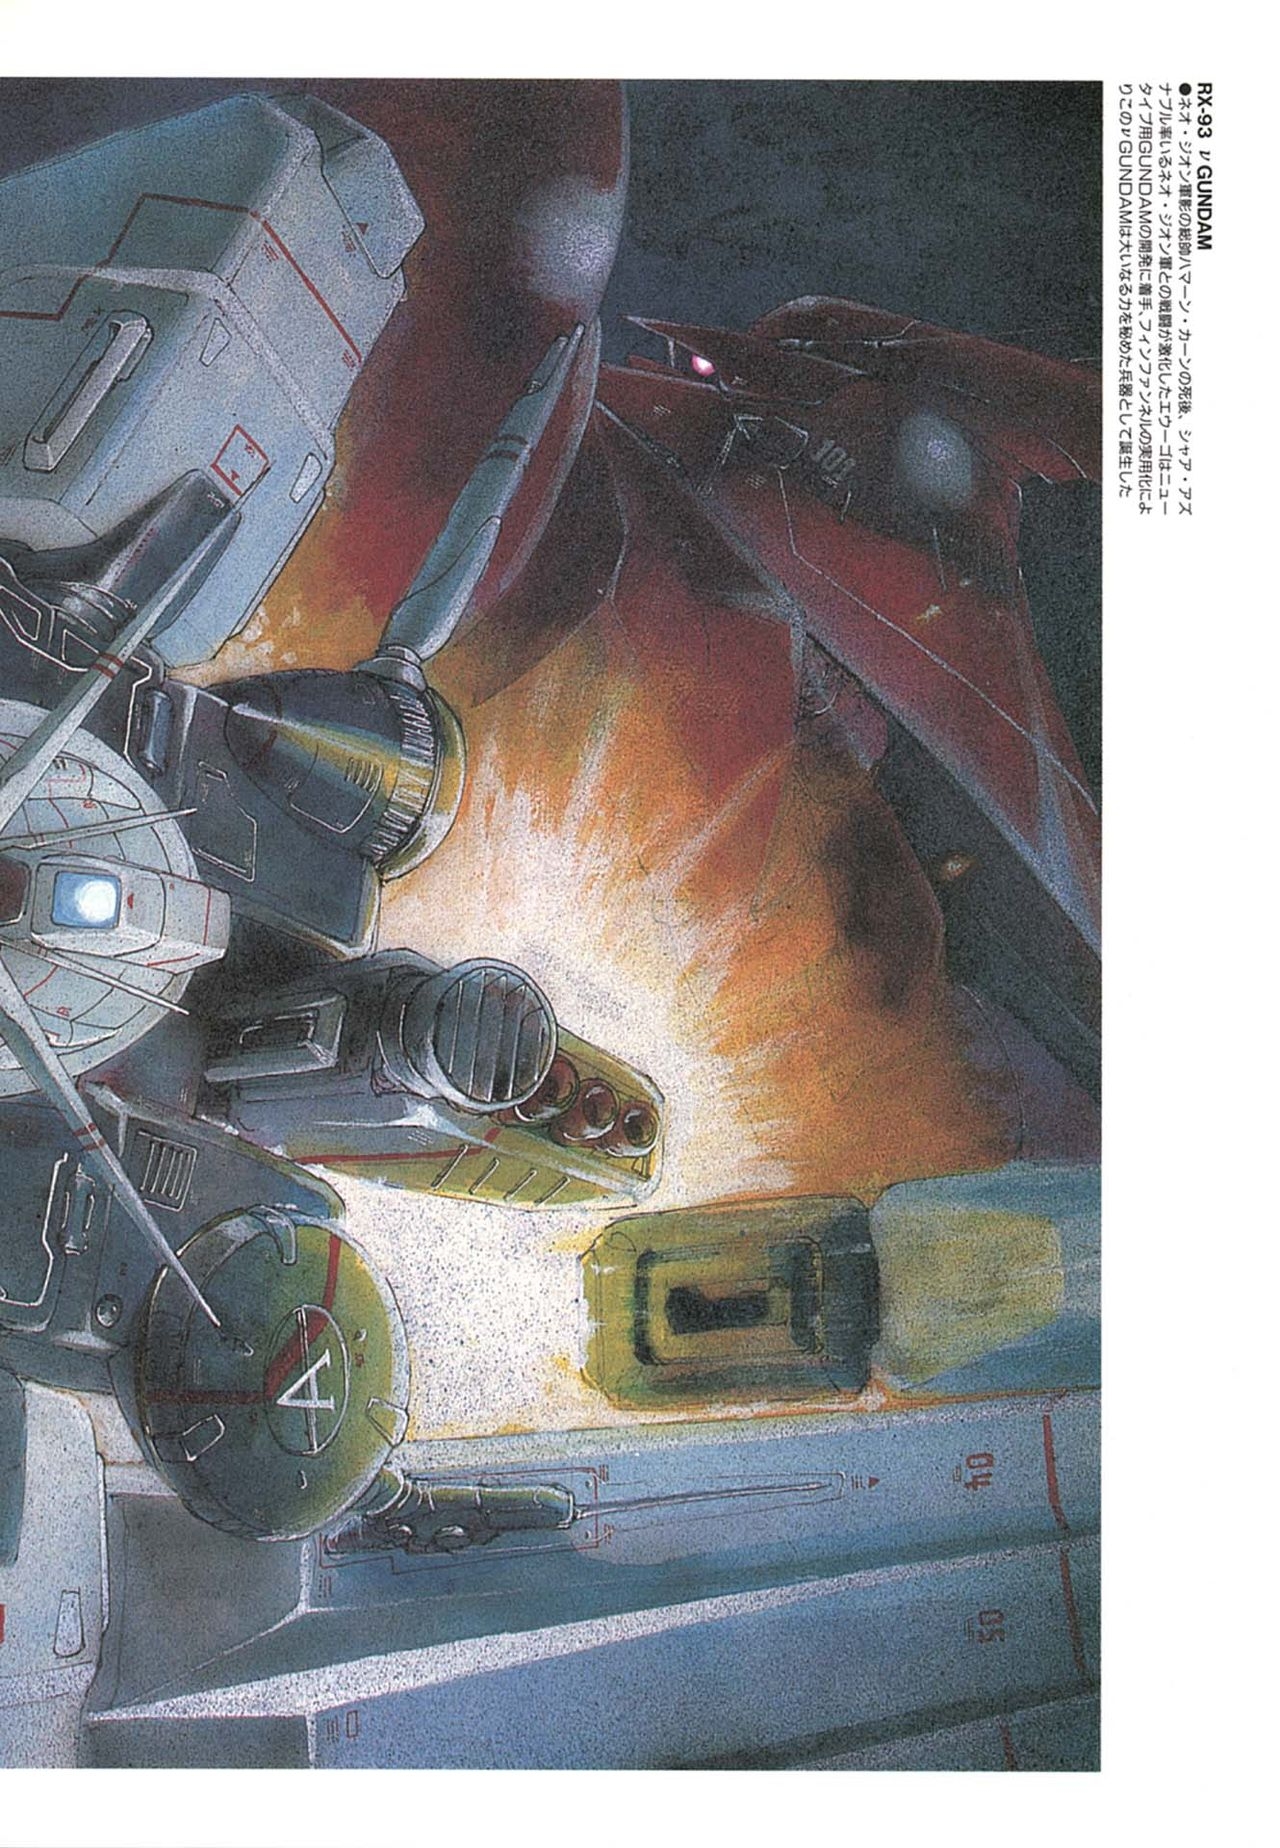 [Kazuhisa Kondo] Kazuhisa Kondo 2D & 3D Works - Go Ahead - From Mobile Suit Gundam to Original Mechanism 49